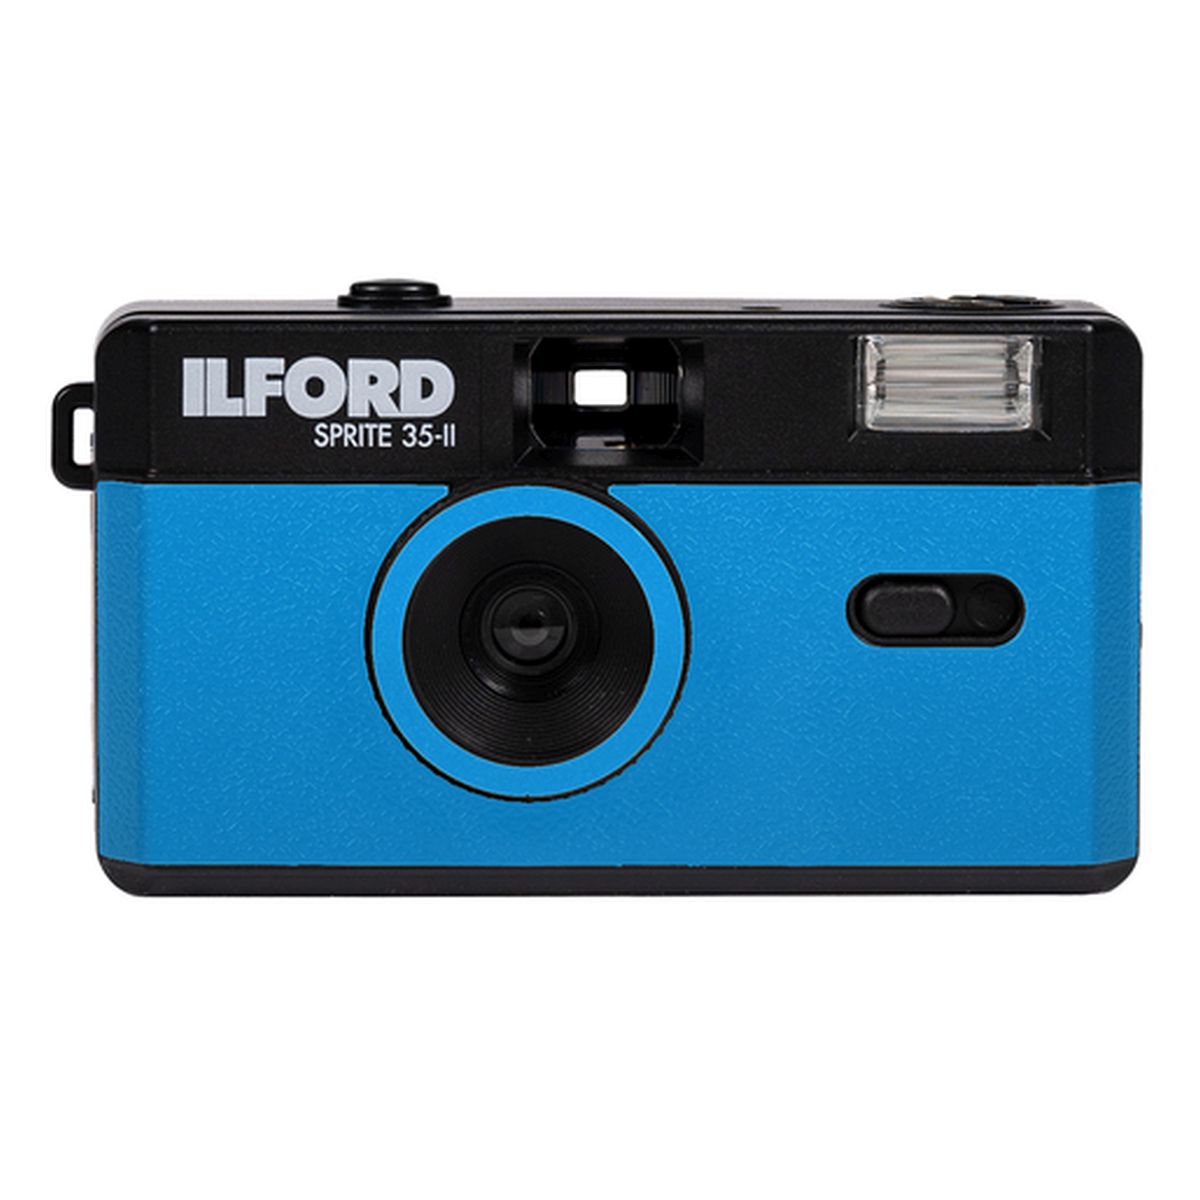 Ilford Sprite 35-II Kamera, blau & schwarz